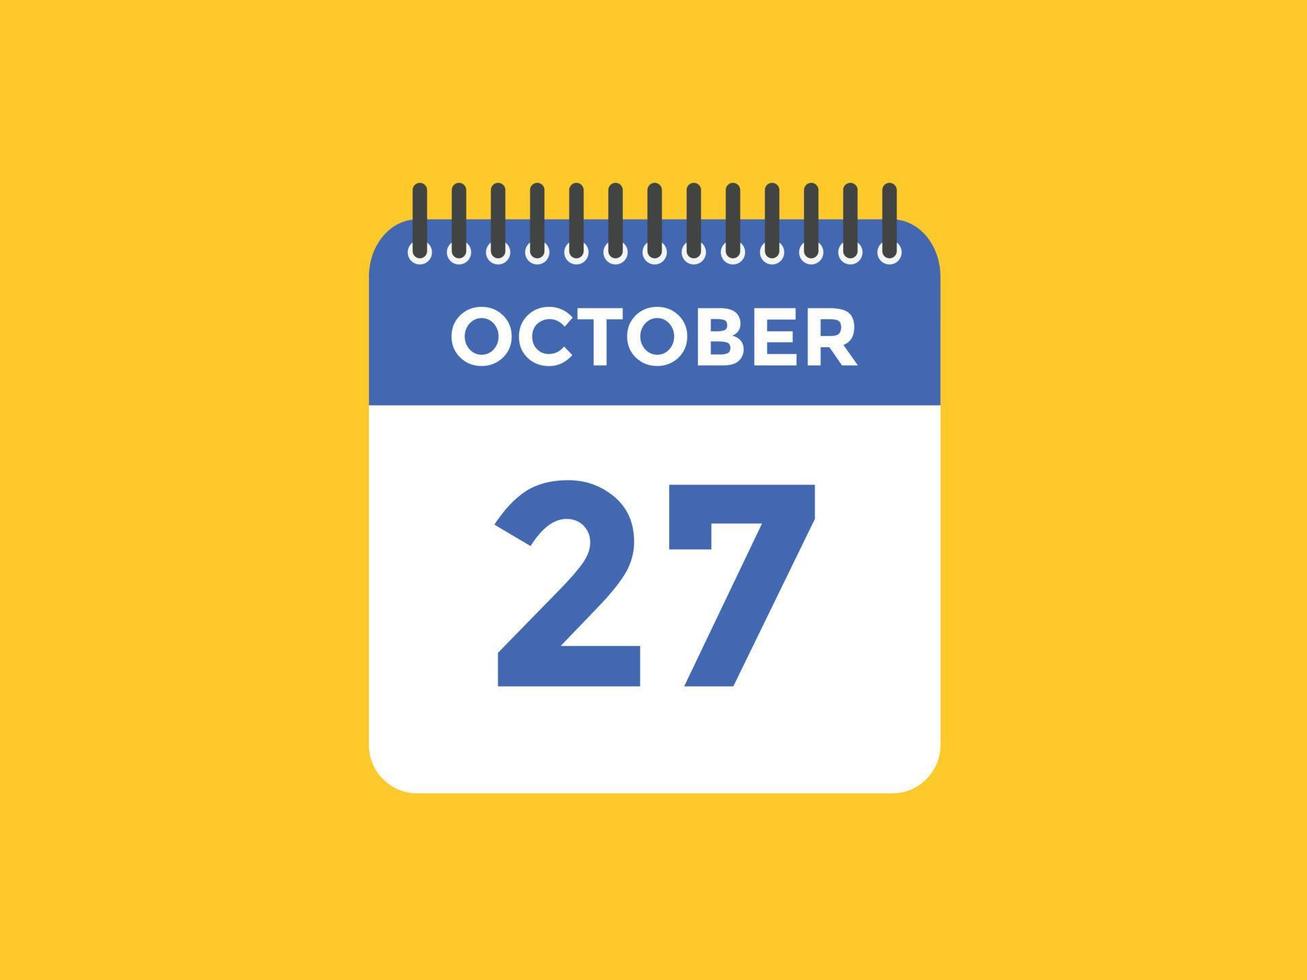 october 27 calendar reminder. 27th october daily calendar icon template. Calendar 27th october icon Design template. Vector illustration